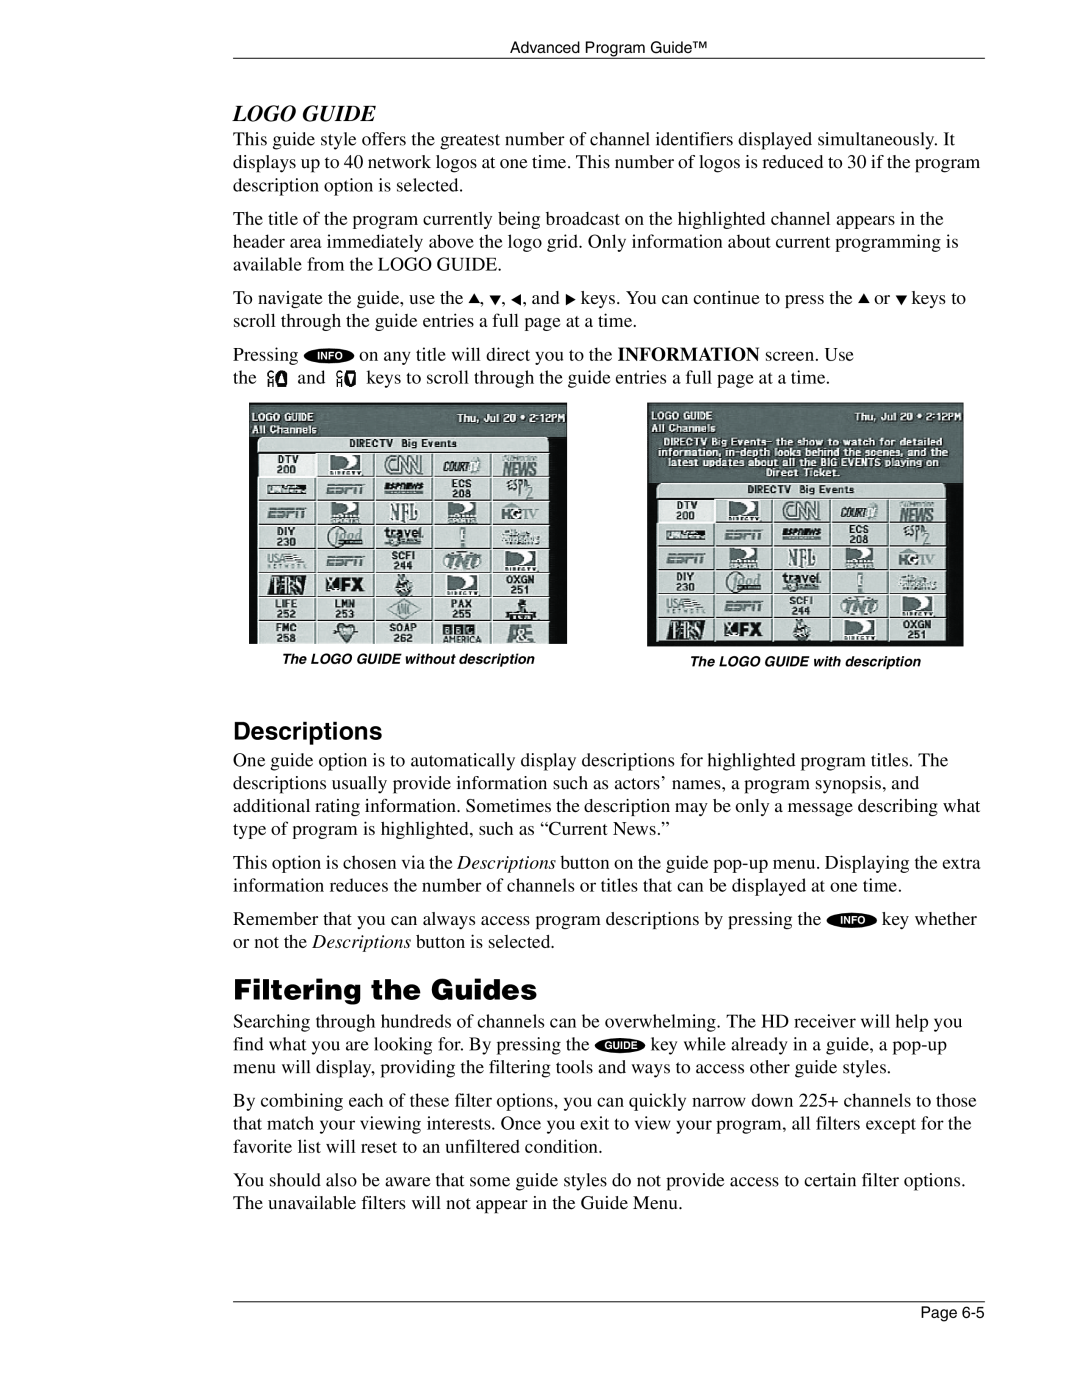 DirecTV HIRD-E86 manual Filtering the Guides, Descriptions, Logo Guide 